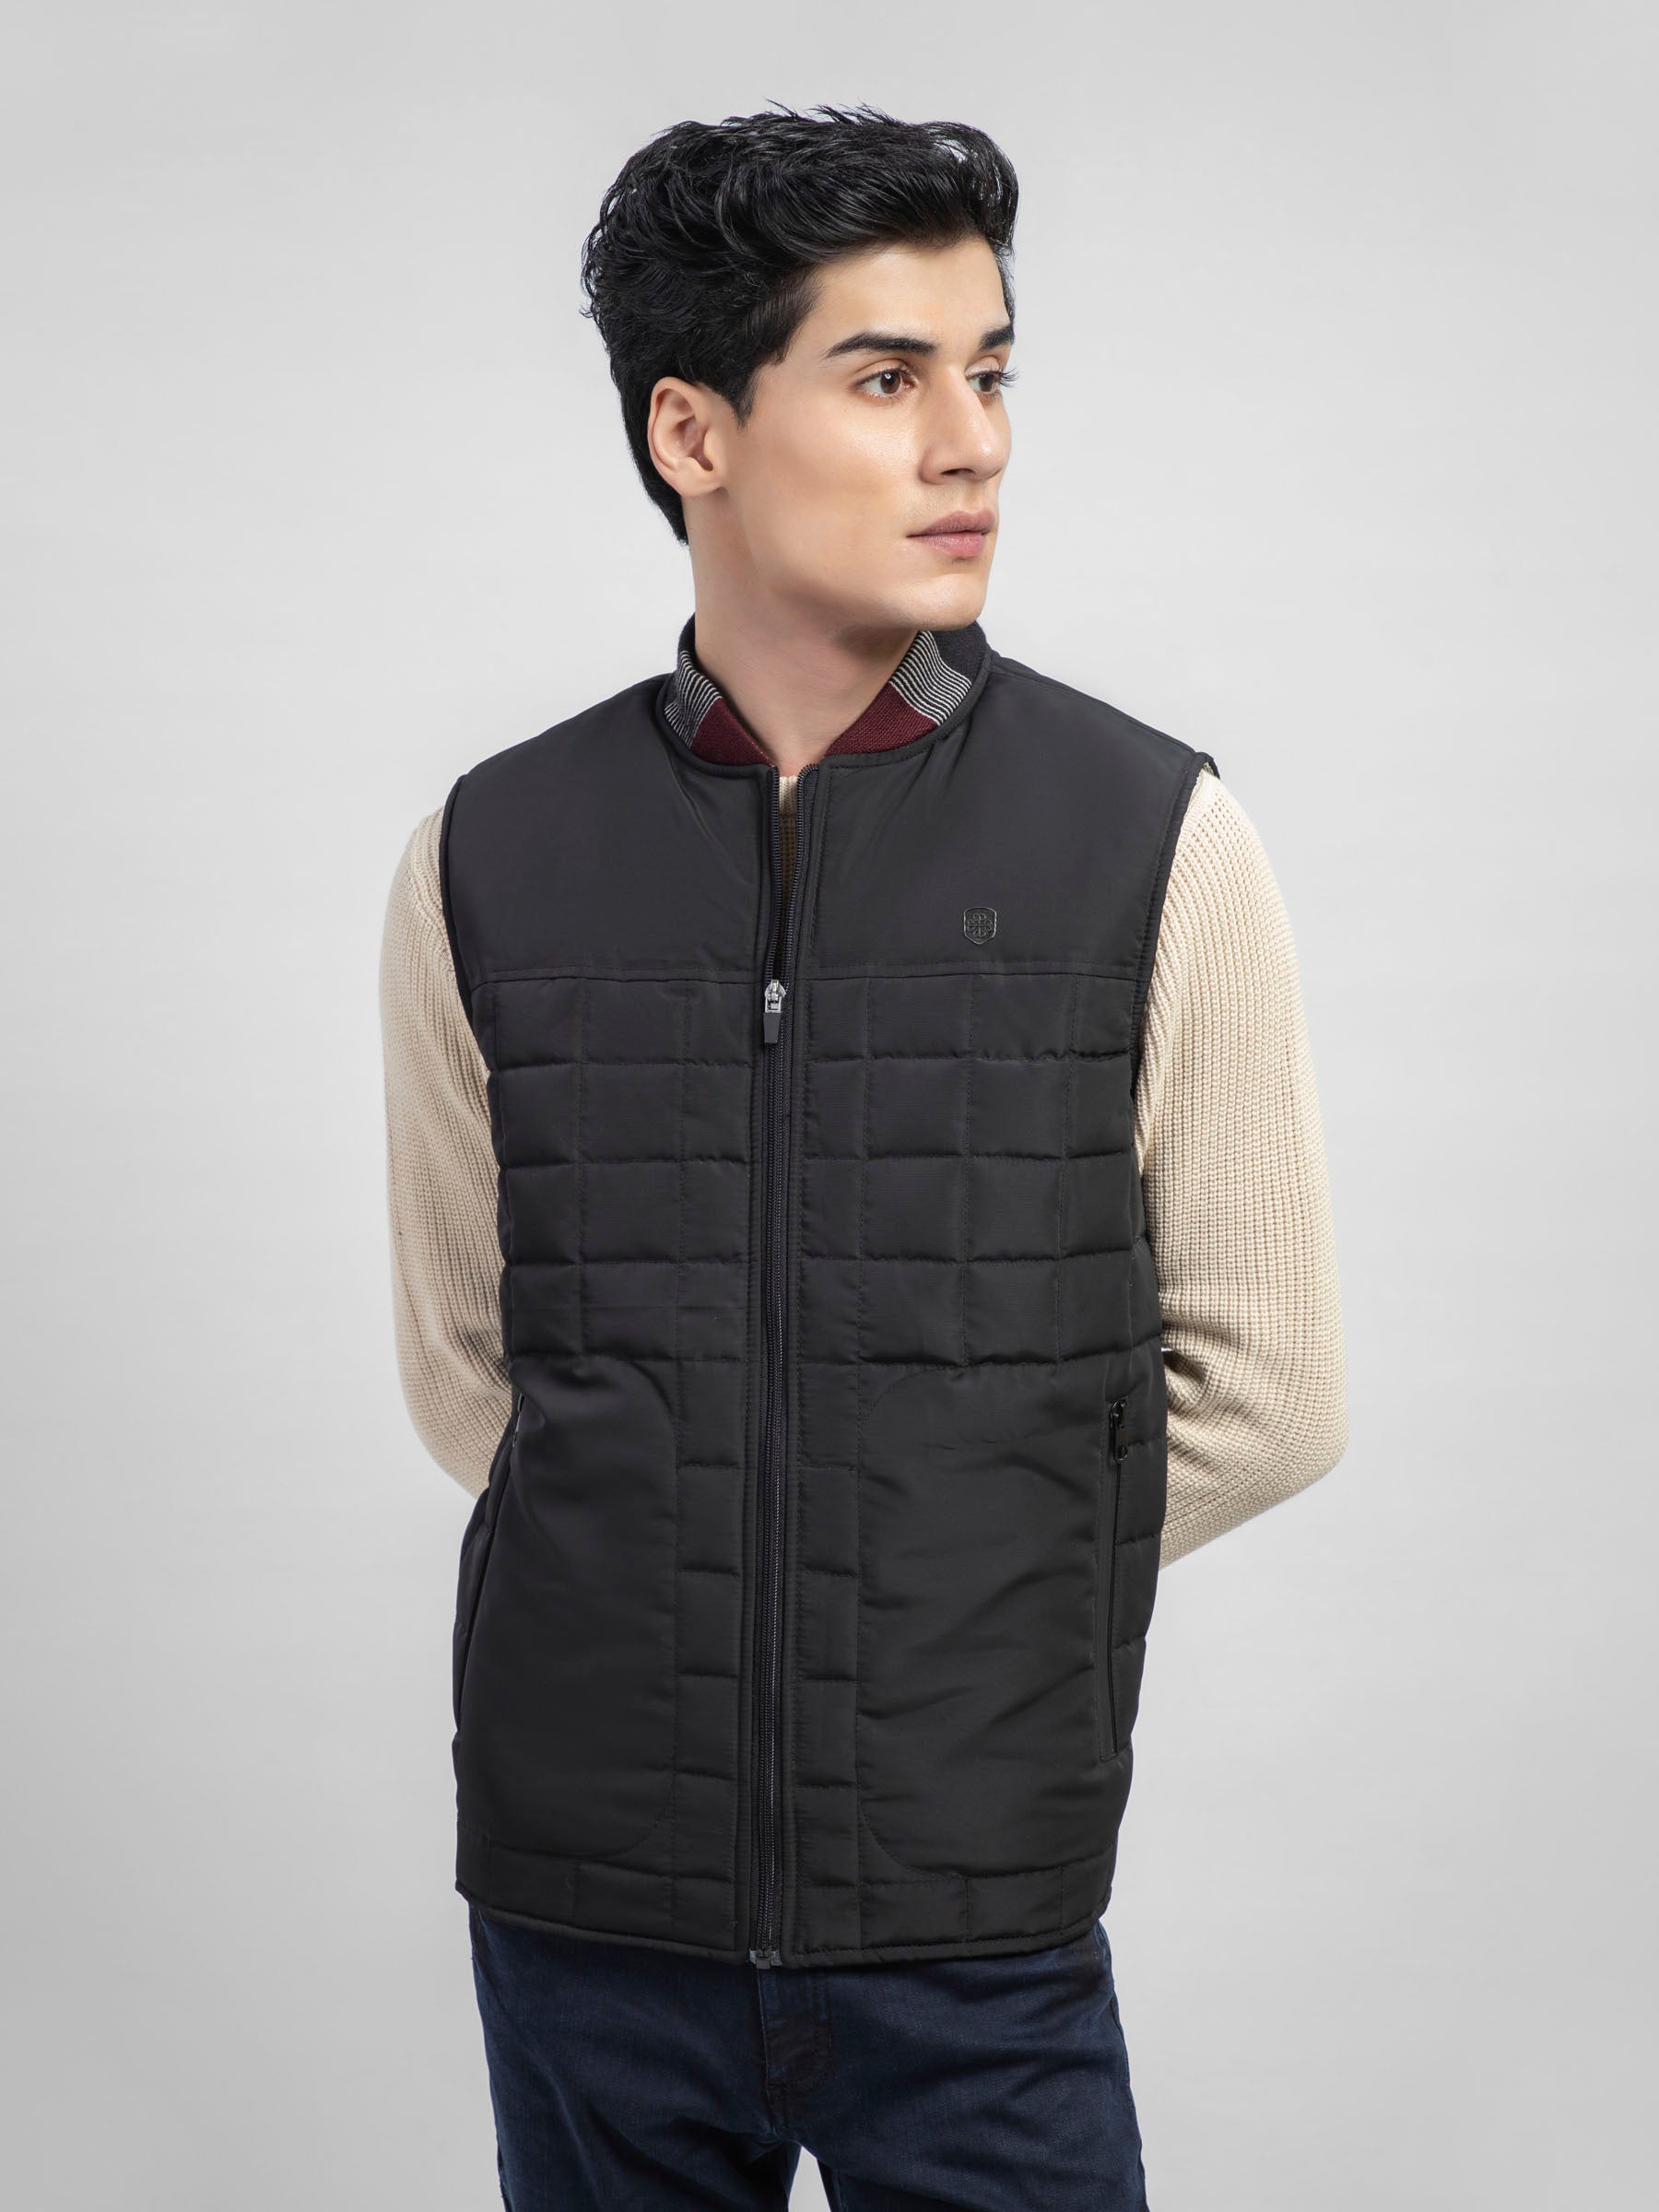 Tracy Half Sleeve Solid Men Jacket - Buy Tracy Half Sleeve Solid Men Jacket  Online at Best Prices in India | Flipkart.com